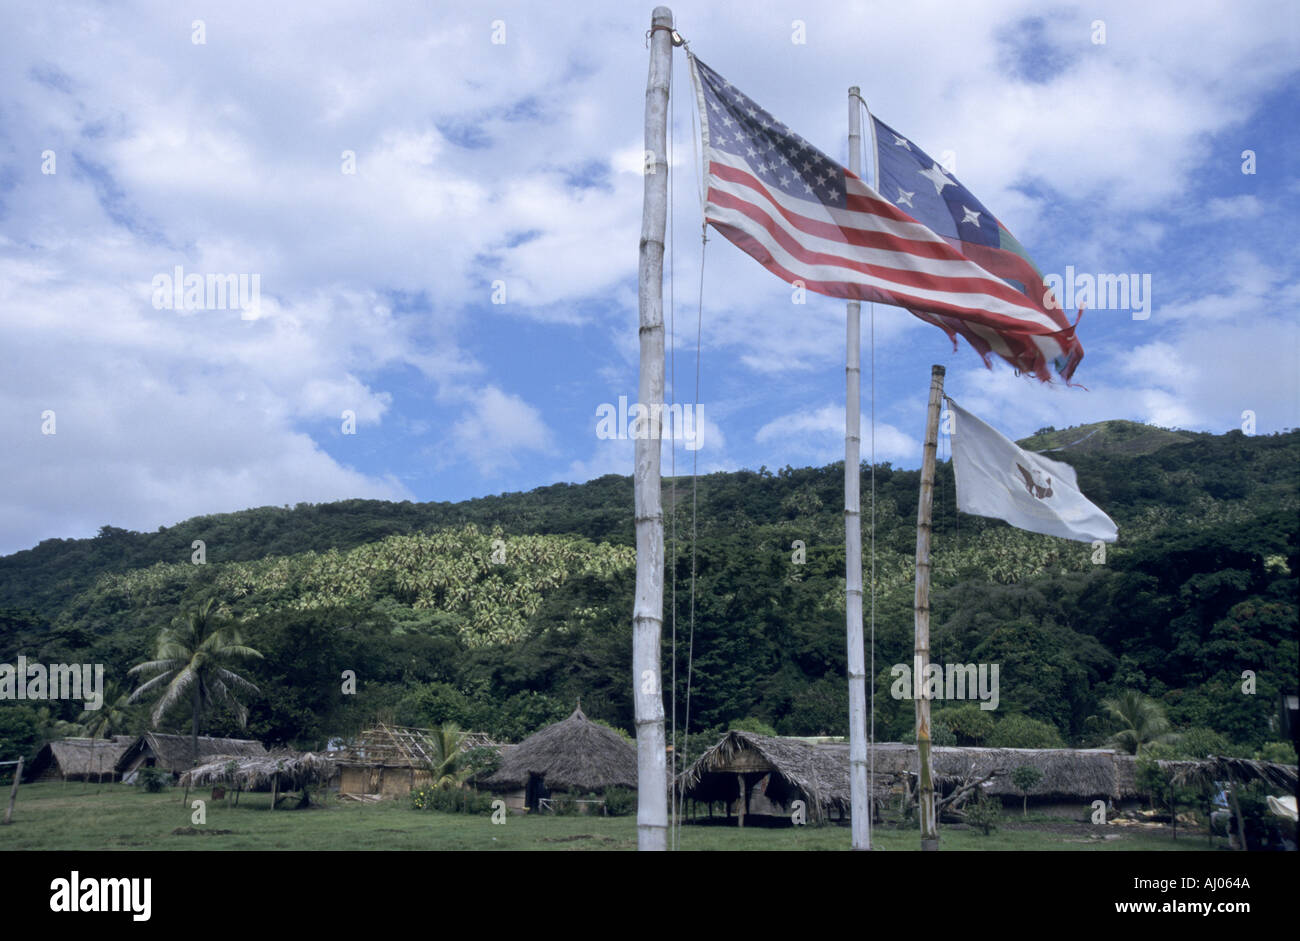 Bandiere di Stati Uniti d'America, US Army e Vanuatu in zolfo Bay Village, Ipekel Ipeukel, dell'Isola di Tanna, Vanuatu. Foto Stock